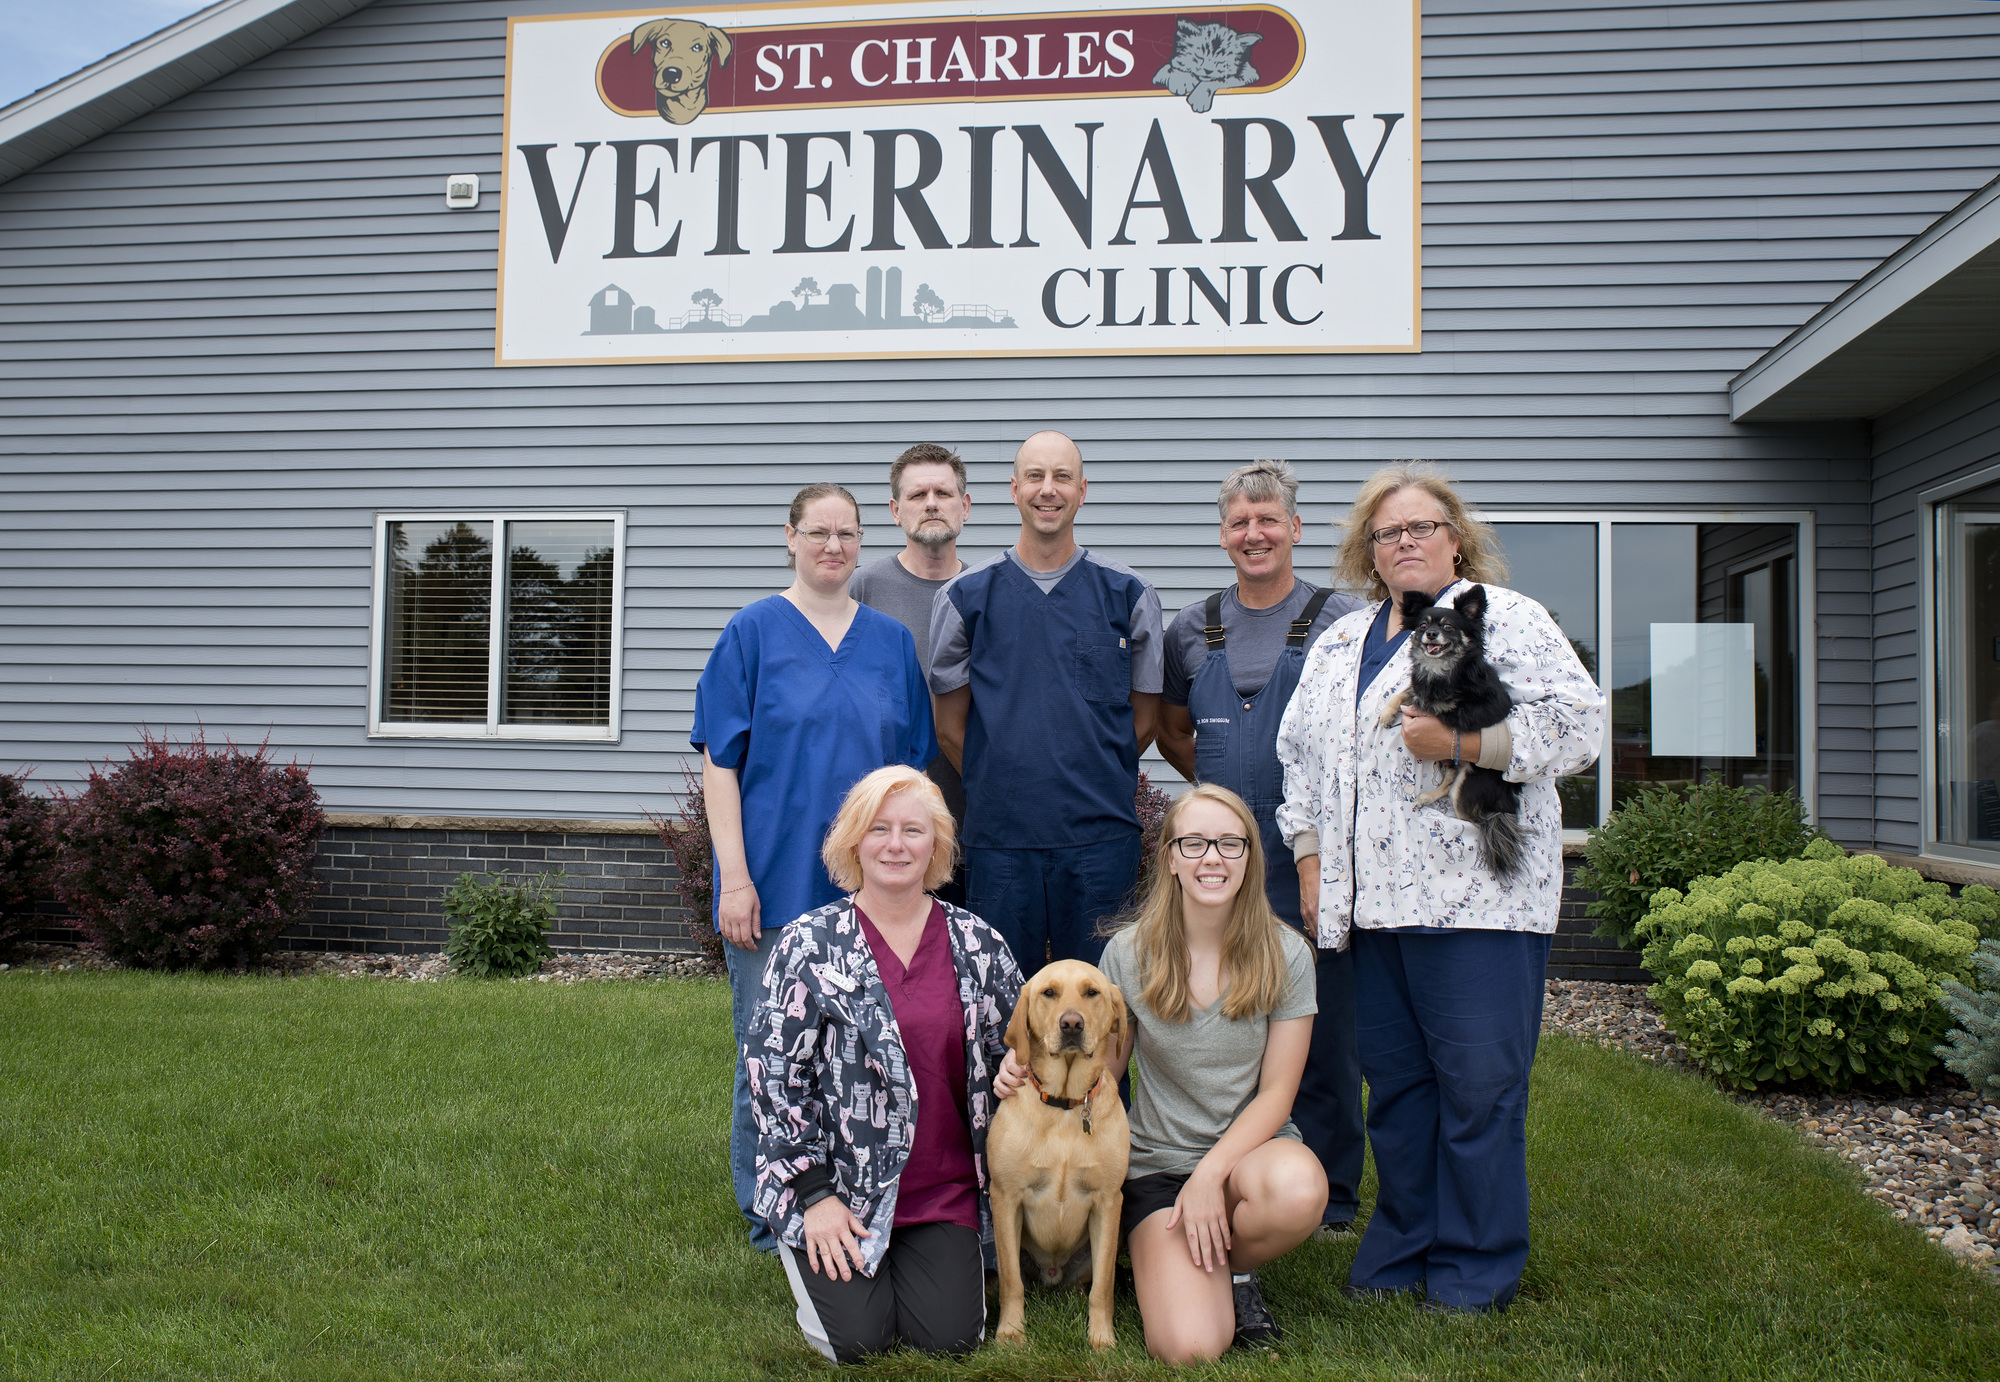 St. Charles Veterinary Clinic Saint Charles (507)932-4000